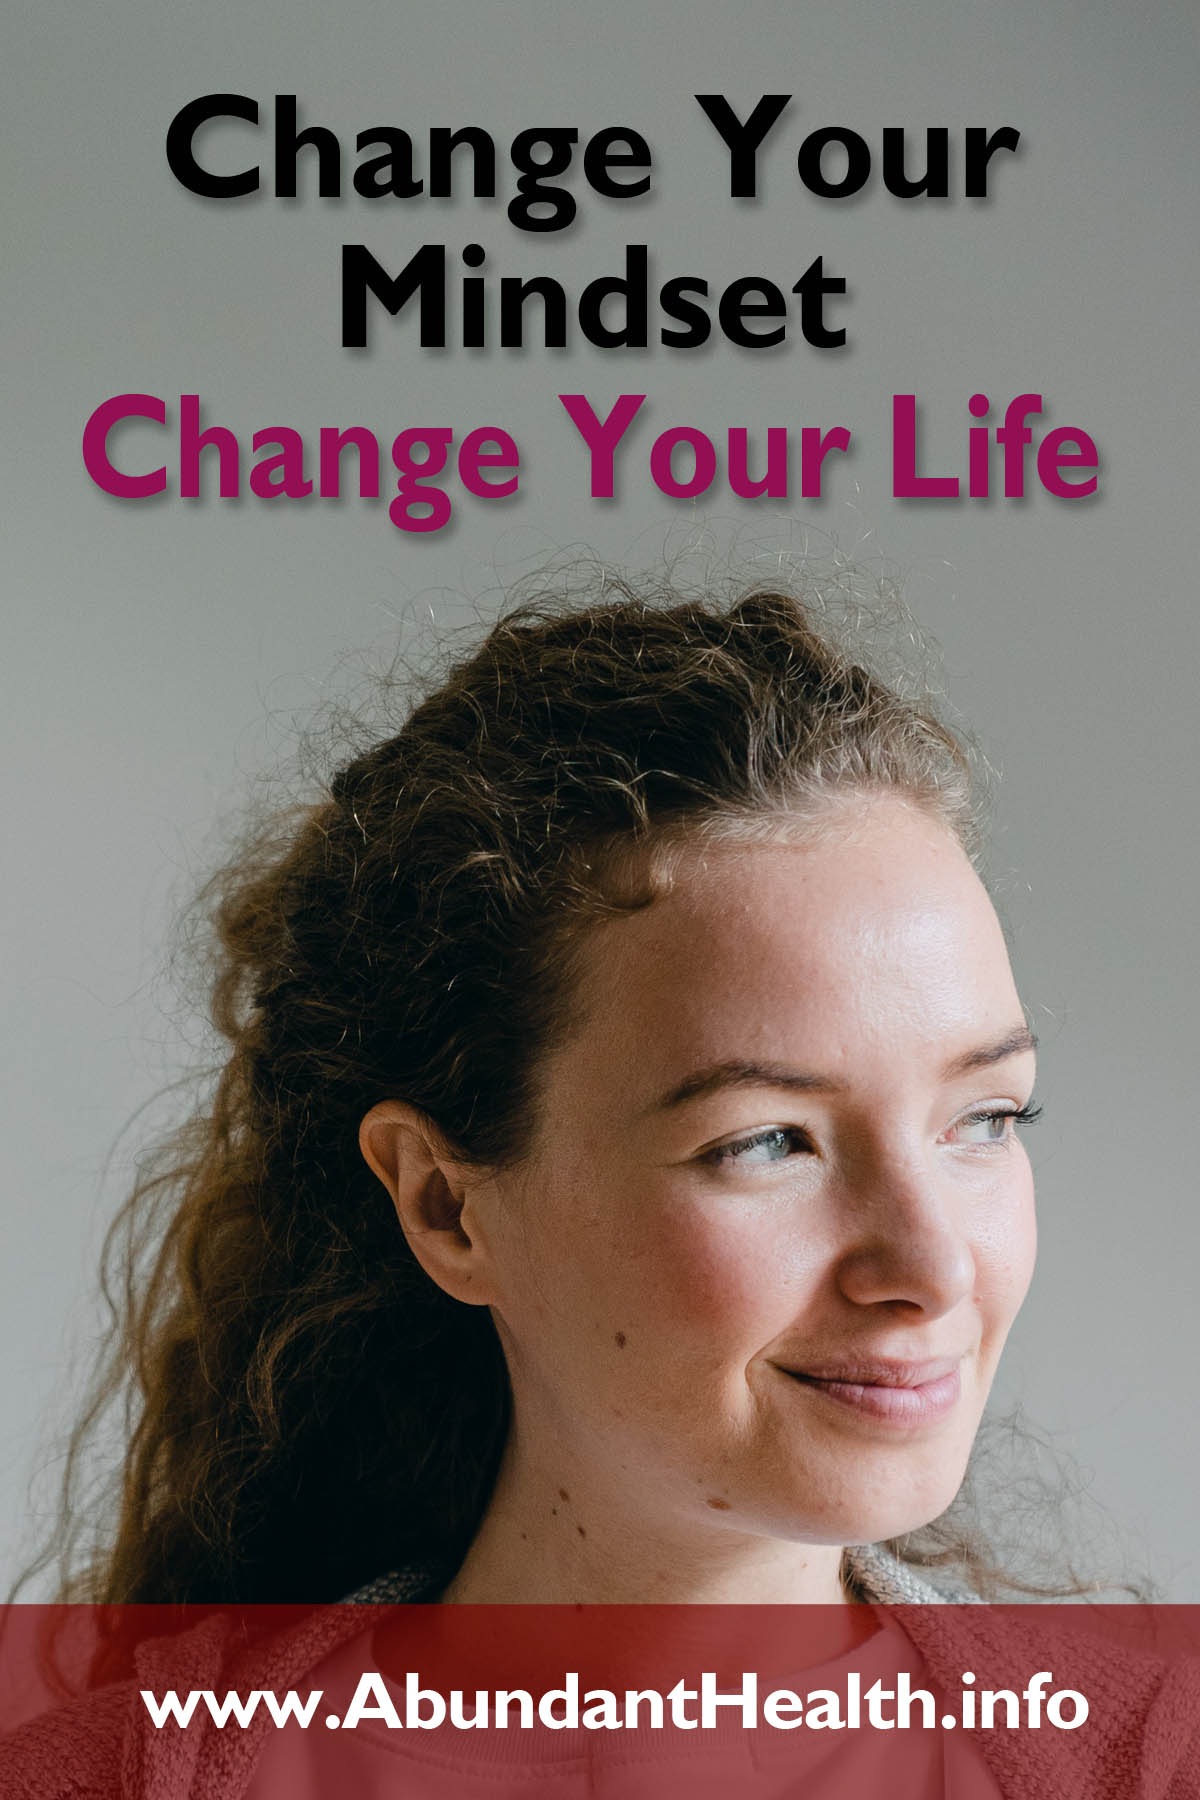 Change Your Mindset: Change Your Life